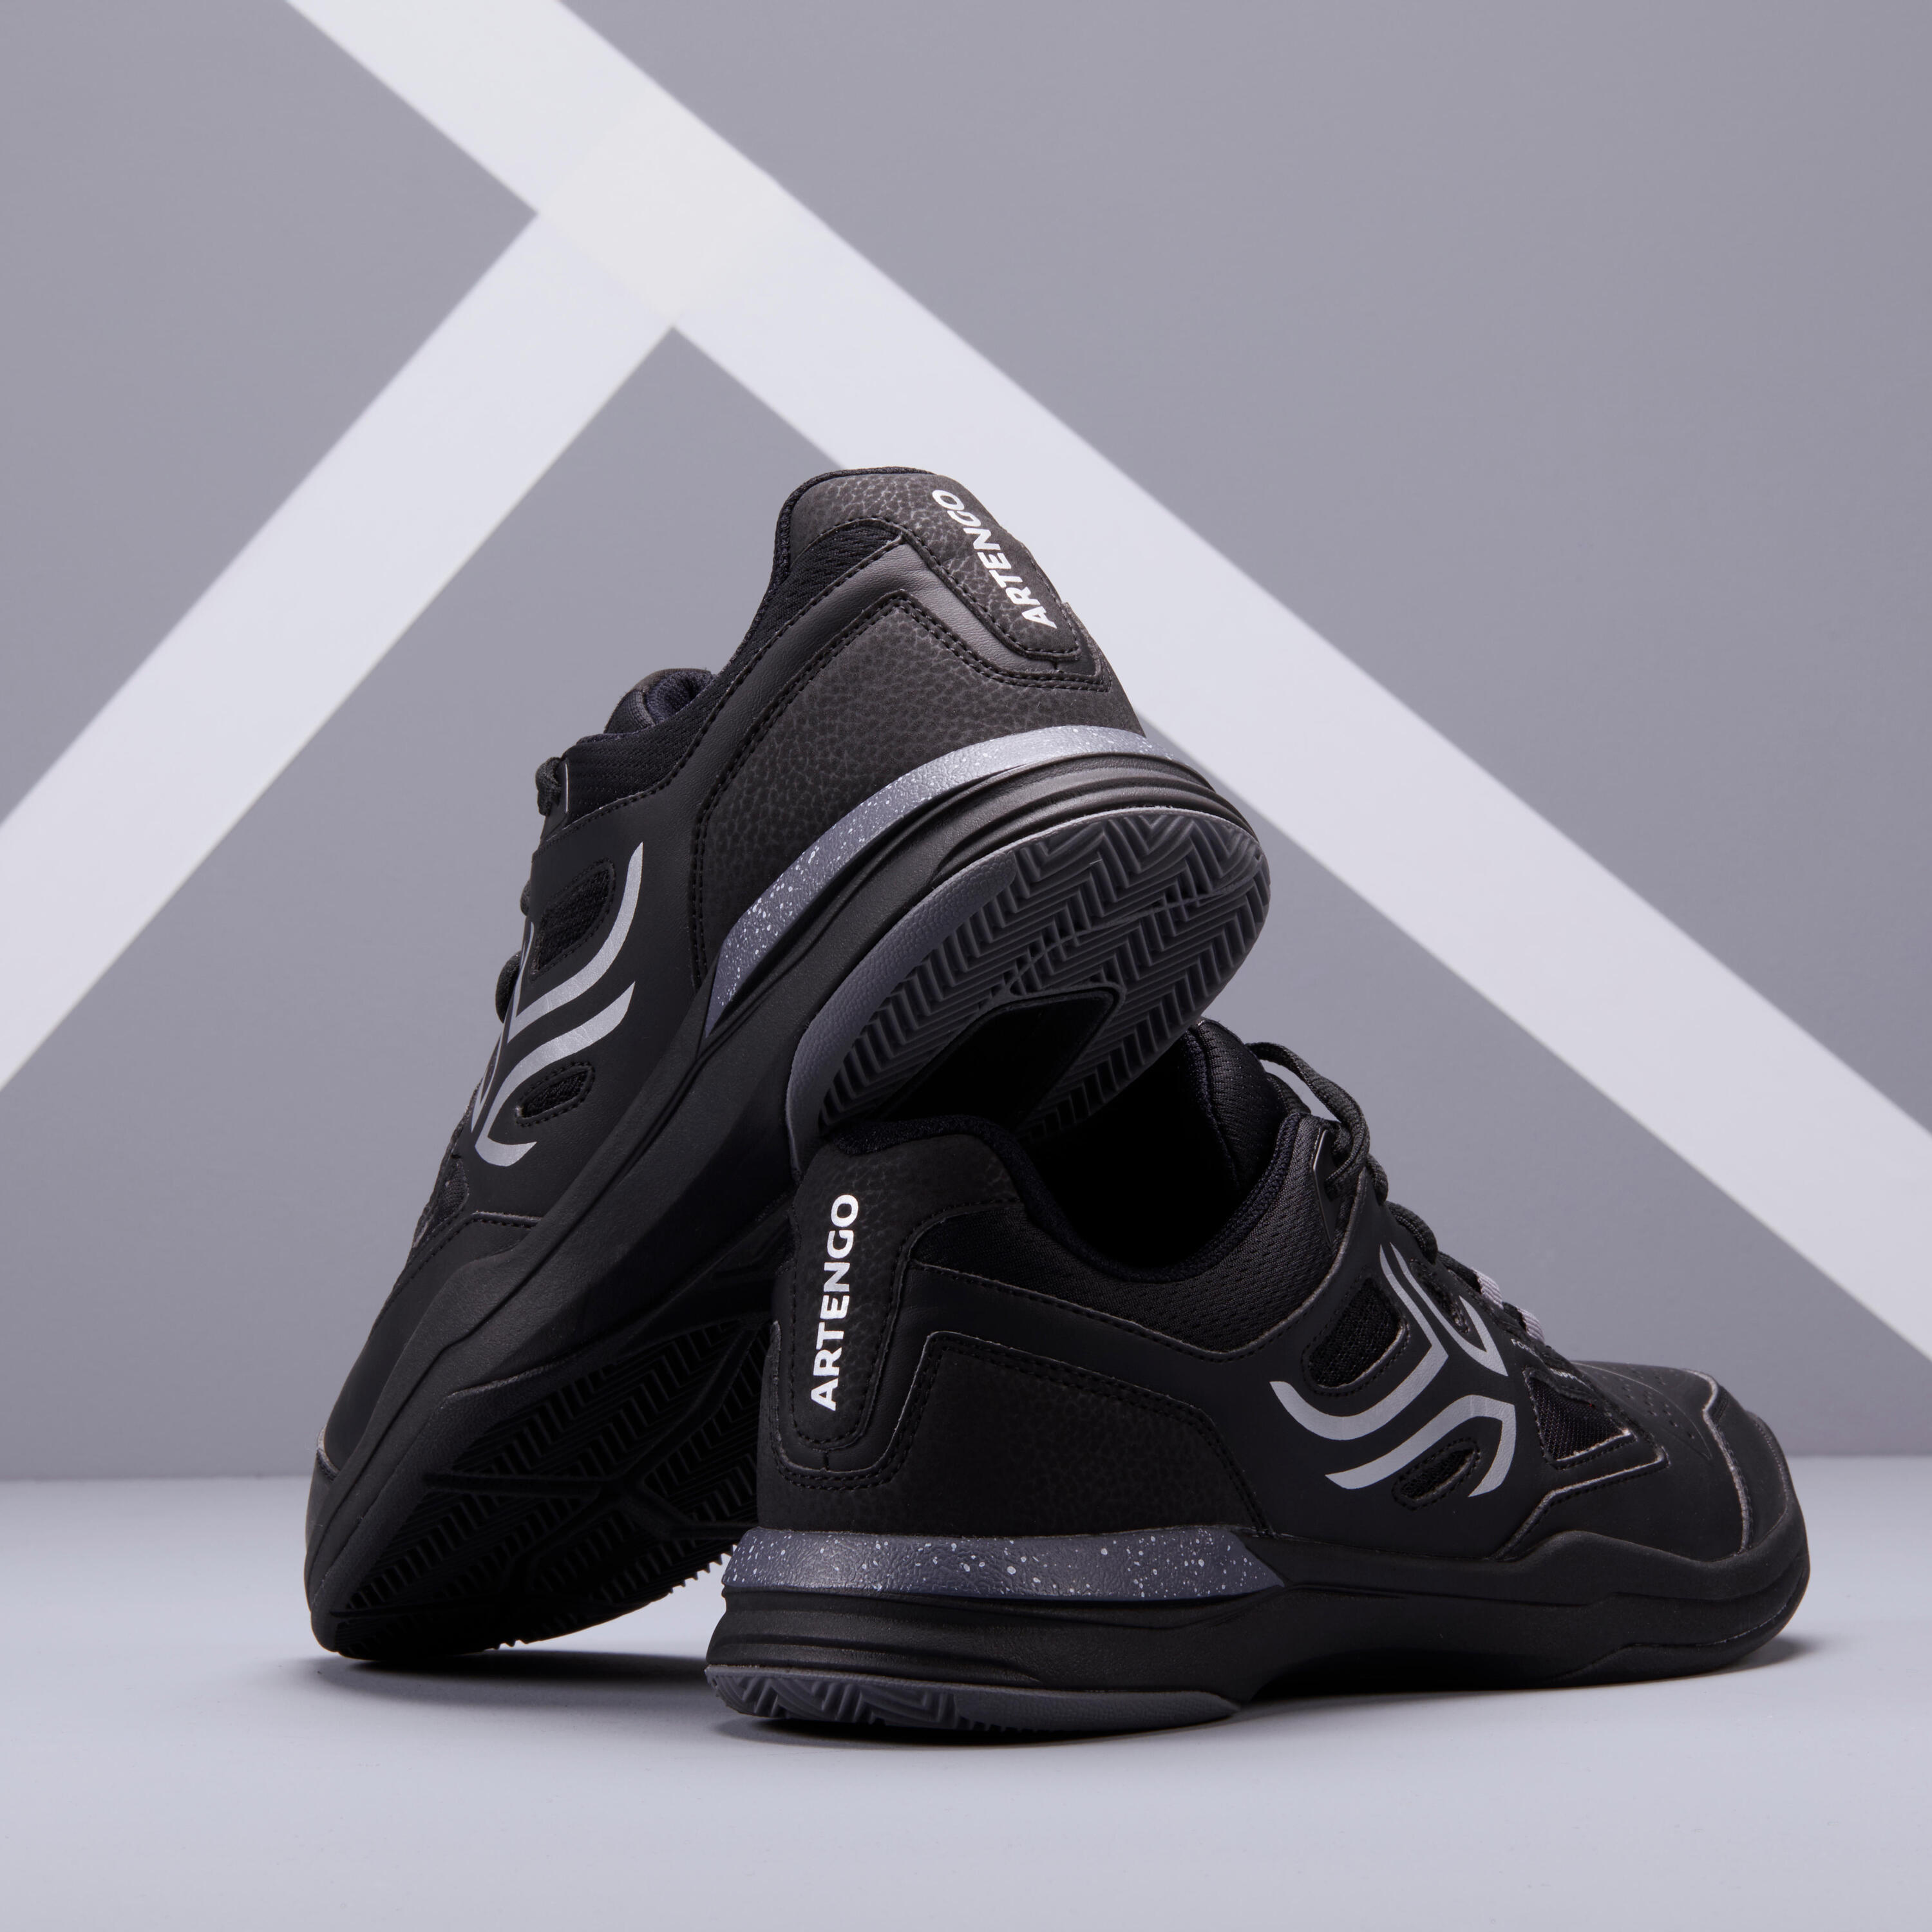 Men's Clay Court Tennis Shoes TS 500 - Black/Grey 7/8